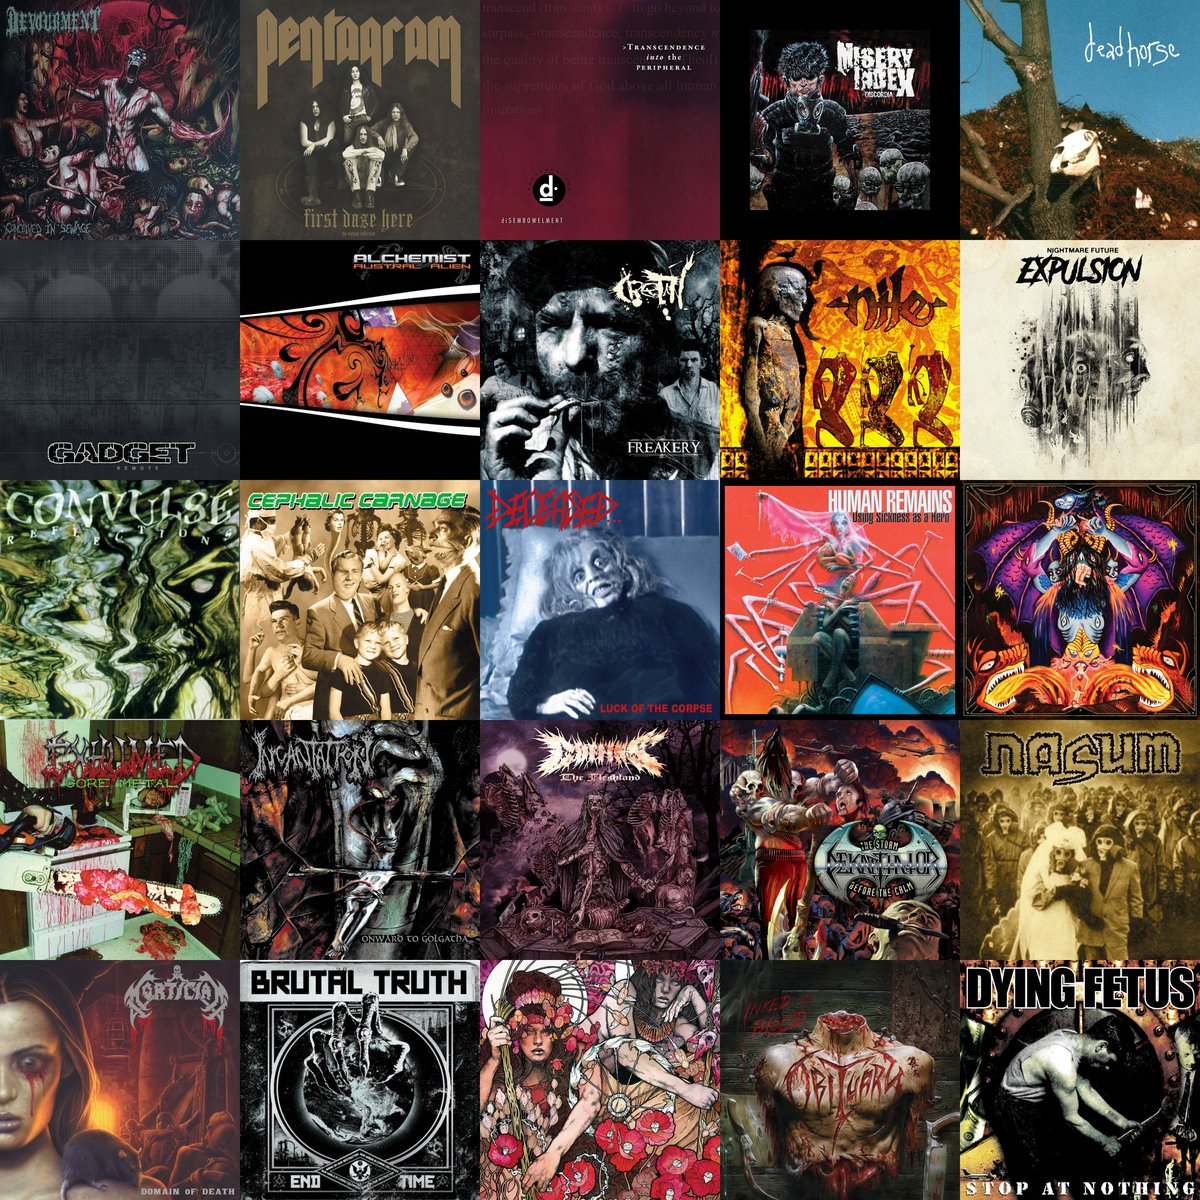 Relapse Records Metal albums 🔥🔥
#DeathMetal #GrindCore #DoomMetal